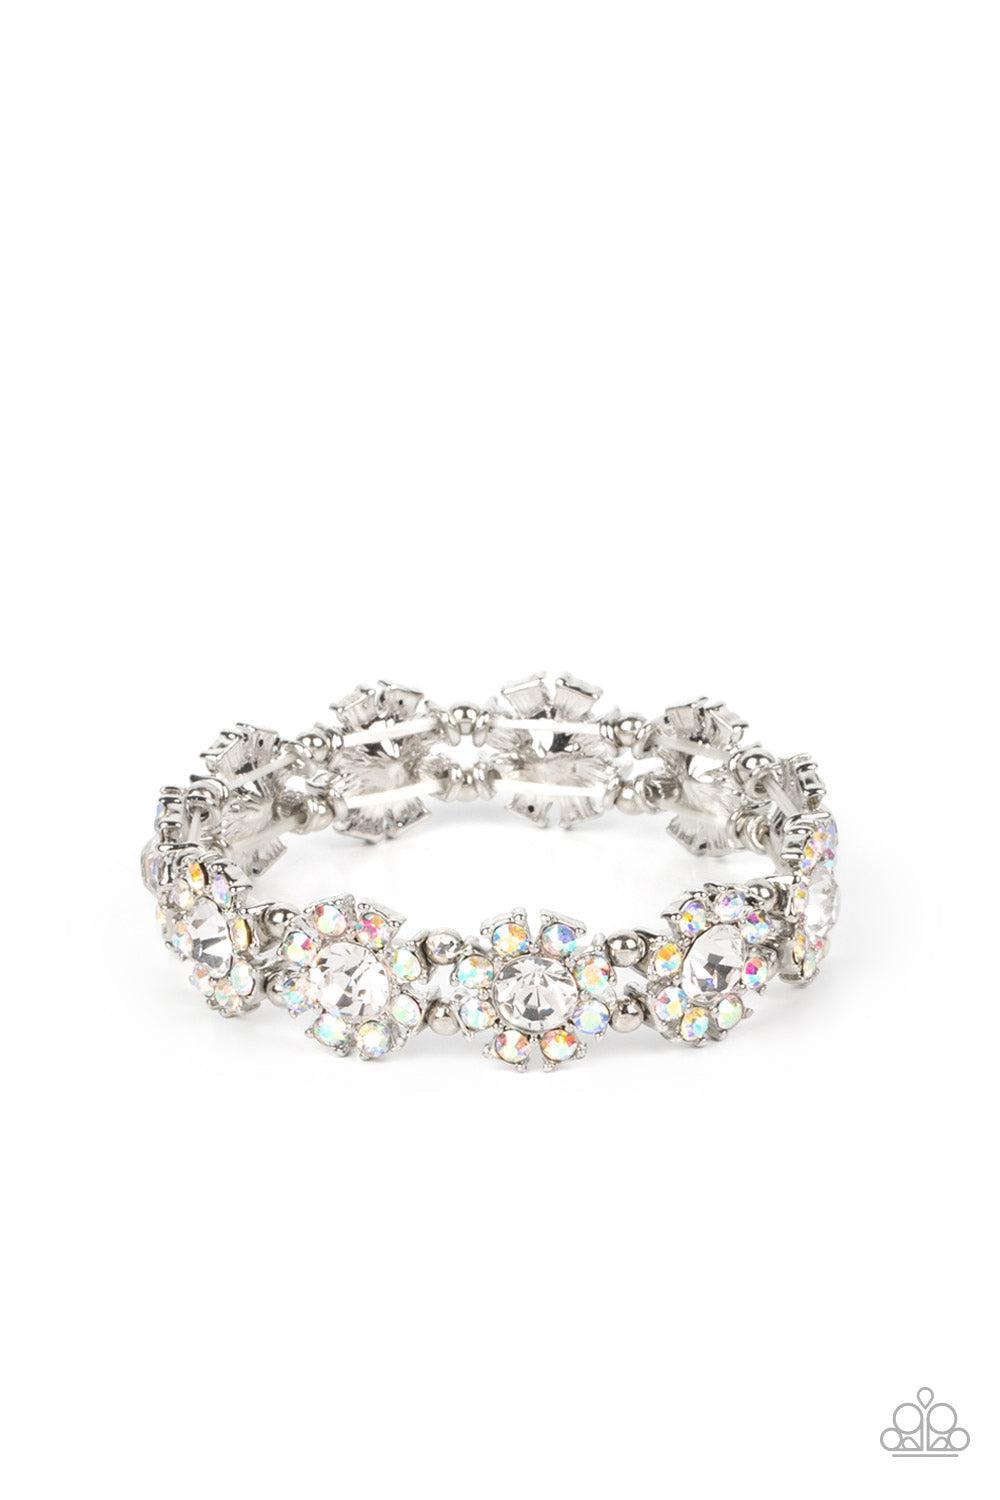 Premium Perennial Multi Iridescent Rhinestone Bracelet - Paparazzi Accessories- lightbox - CarasShop.com - $5 Jewelry by Cara Jewels